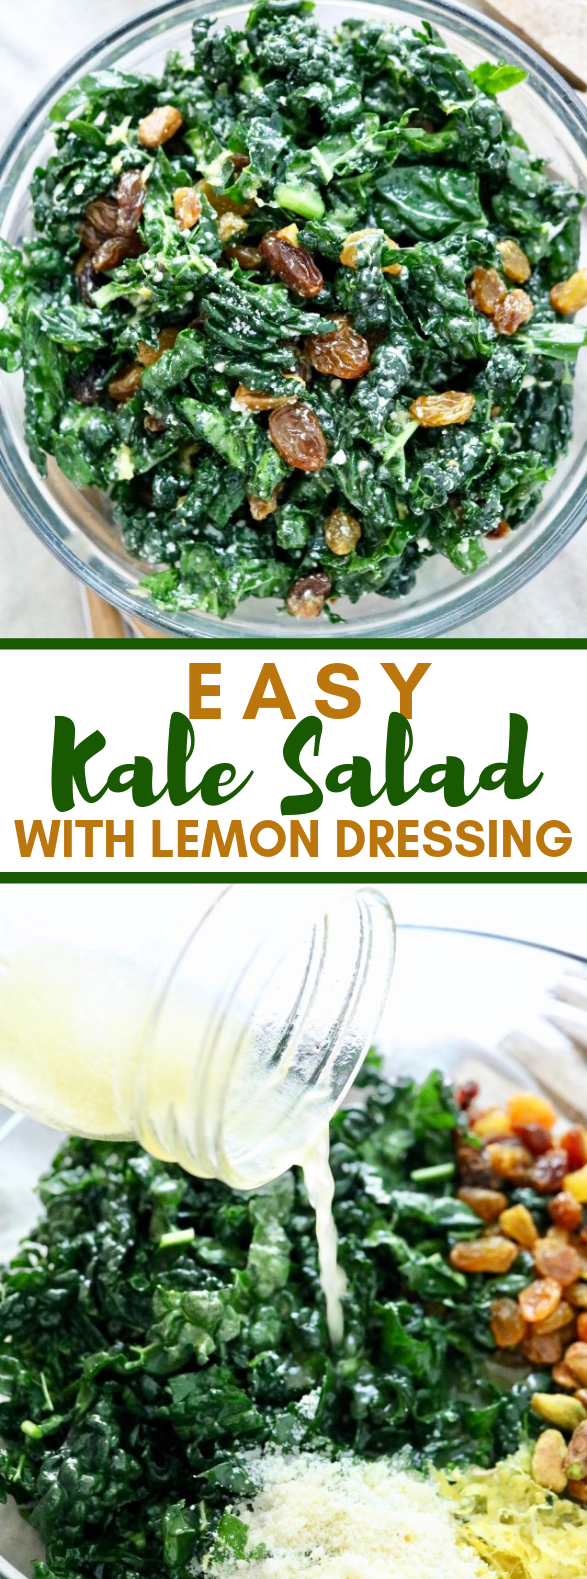 EASY KALE SALAD – WITH LEMON DRESSING #vegetarian #superfood